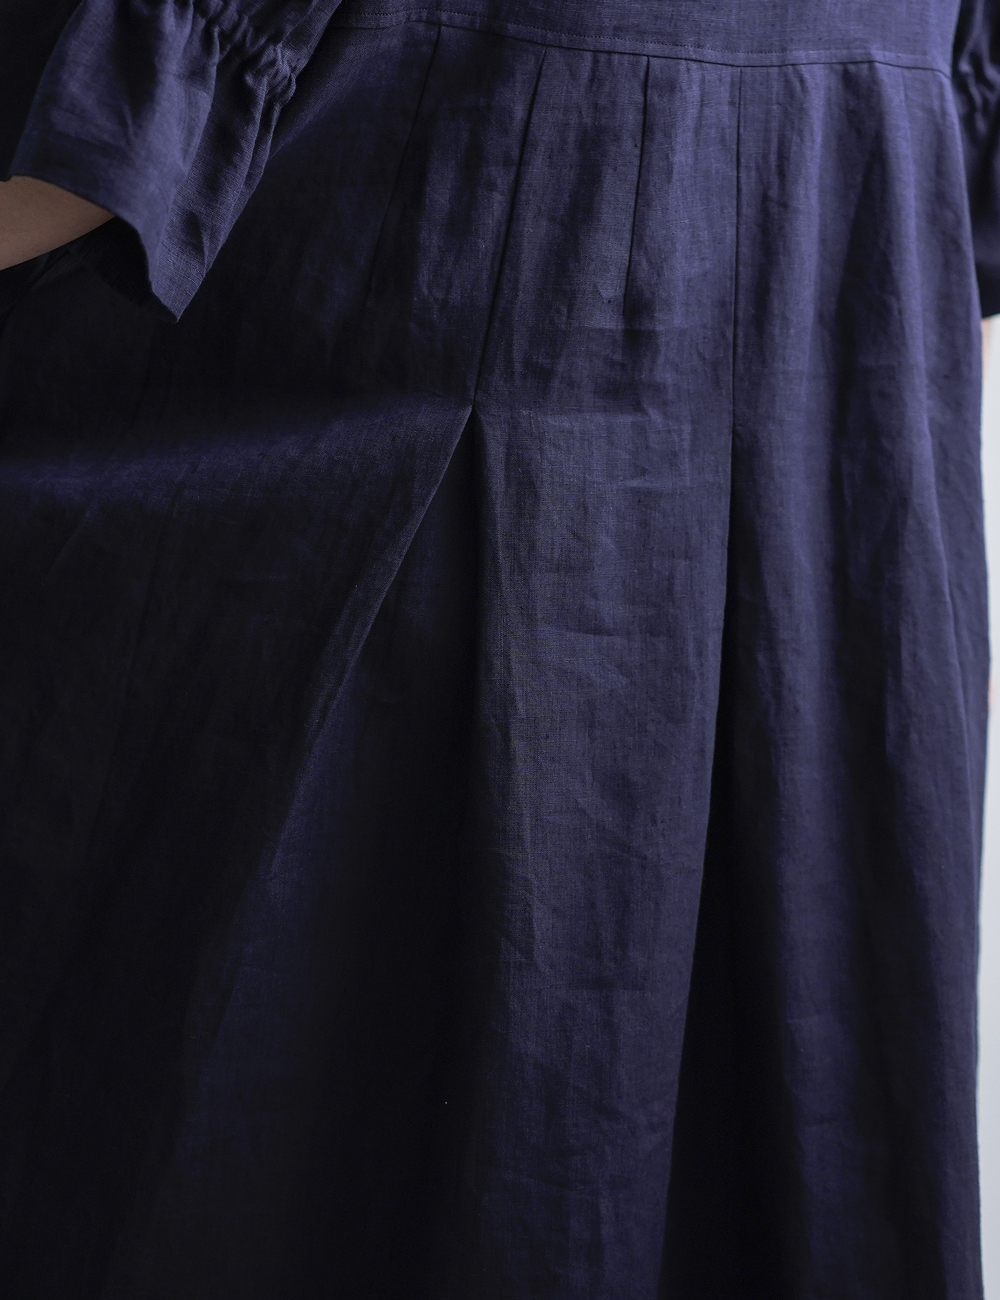 【wafu】Linen Dress 超高密度リネン ワンピース ピンタック 60番手/黒紅色(くろべにいろ) a090b-kbi1